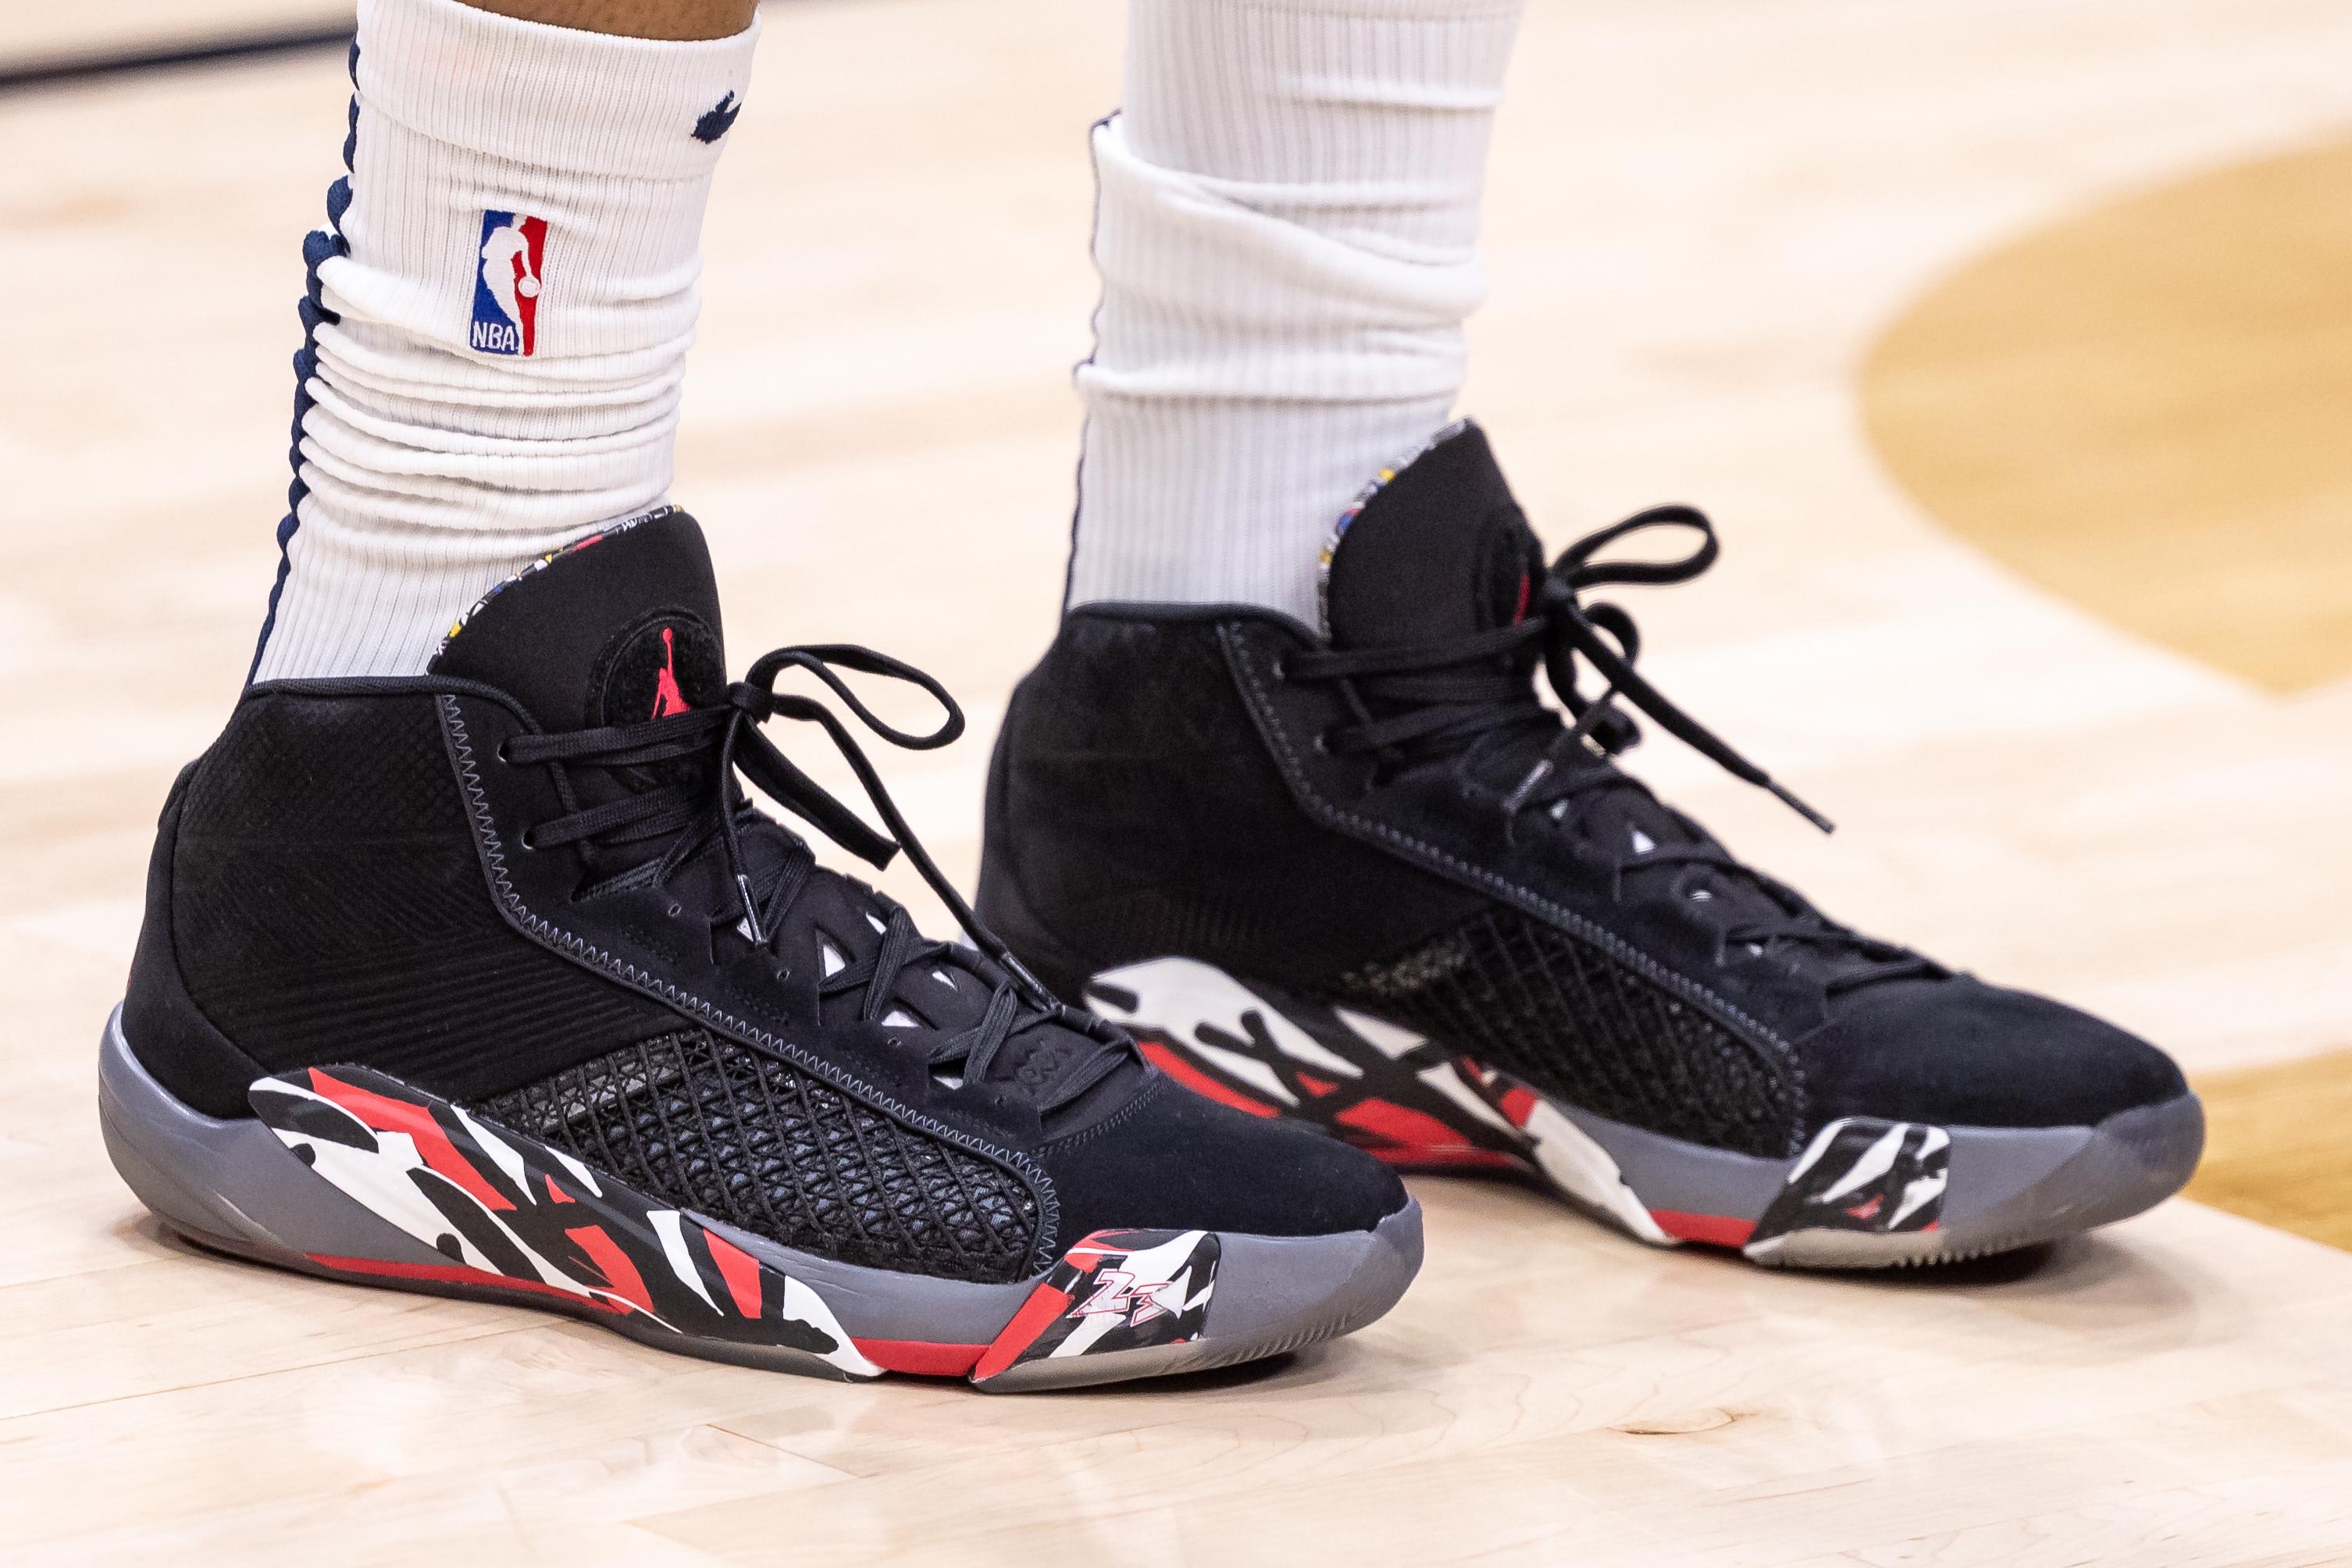 New Orleans Pelicans forward Brandon Ingram's black and red Air Jordan sneakers.